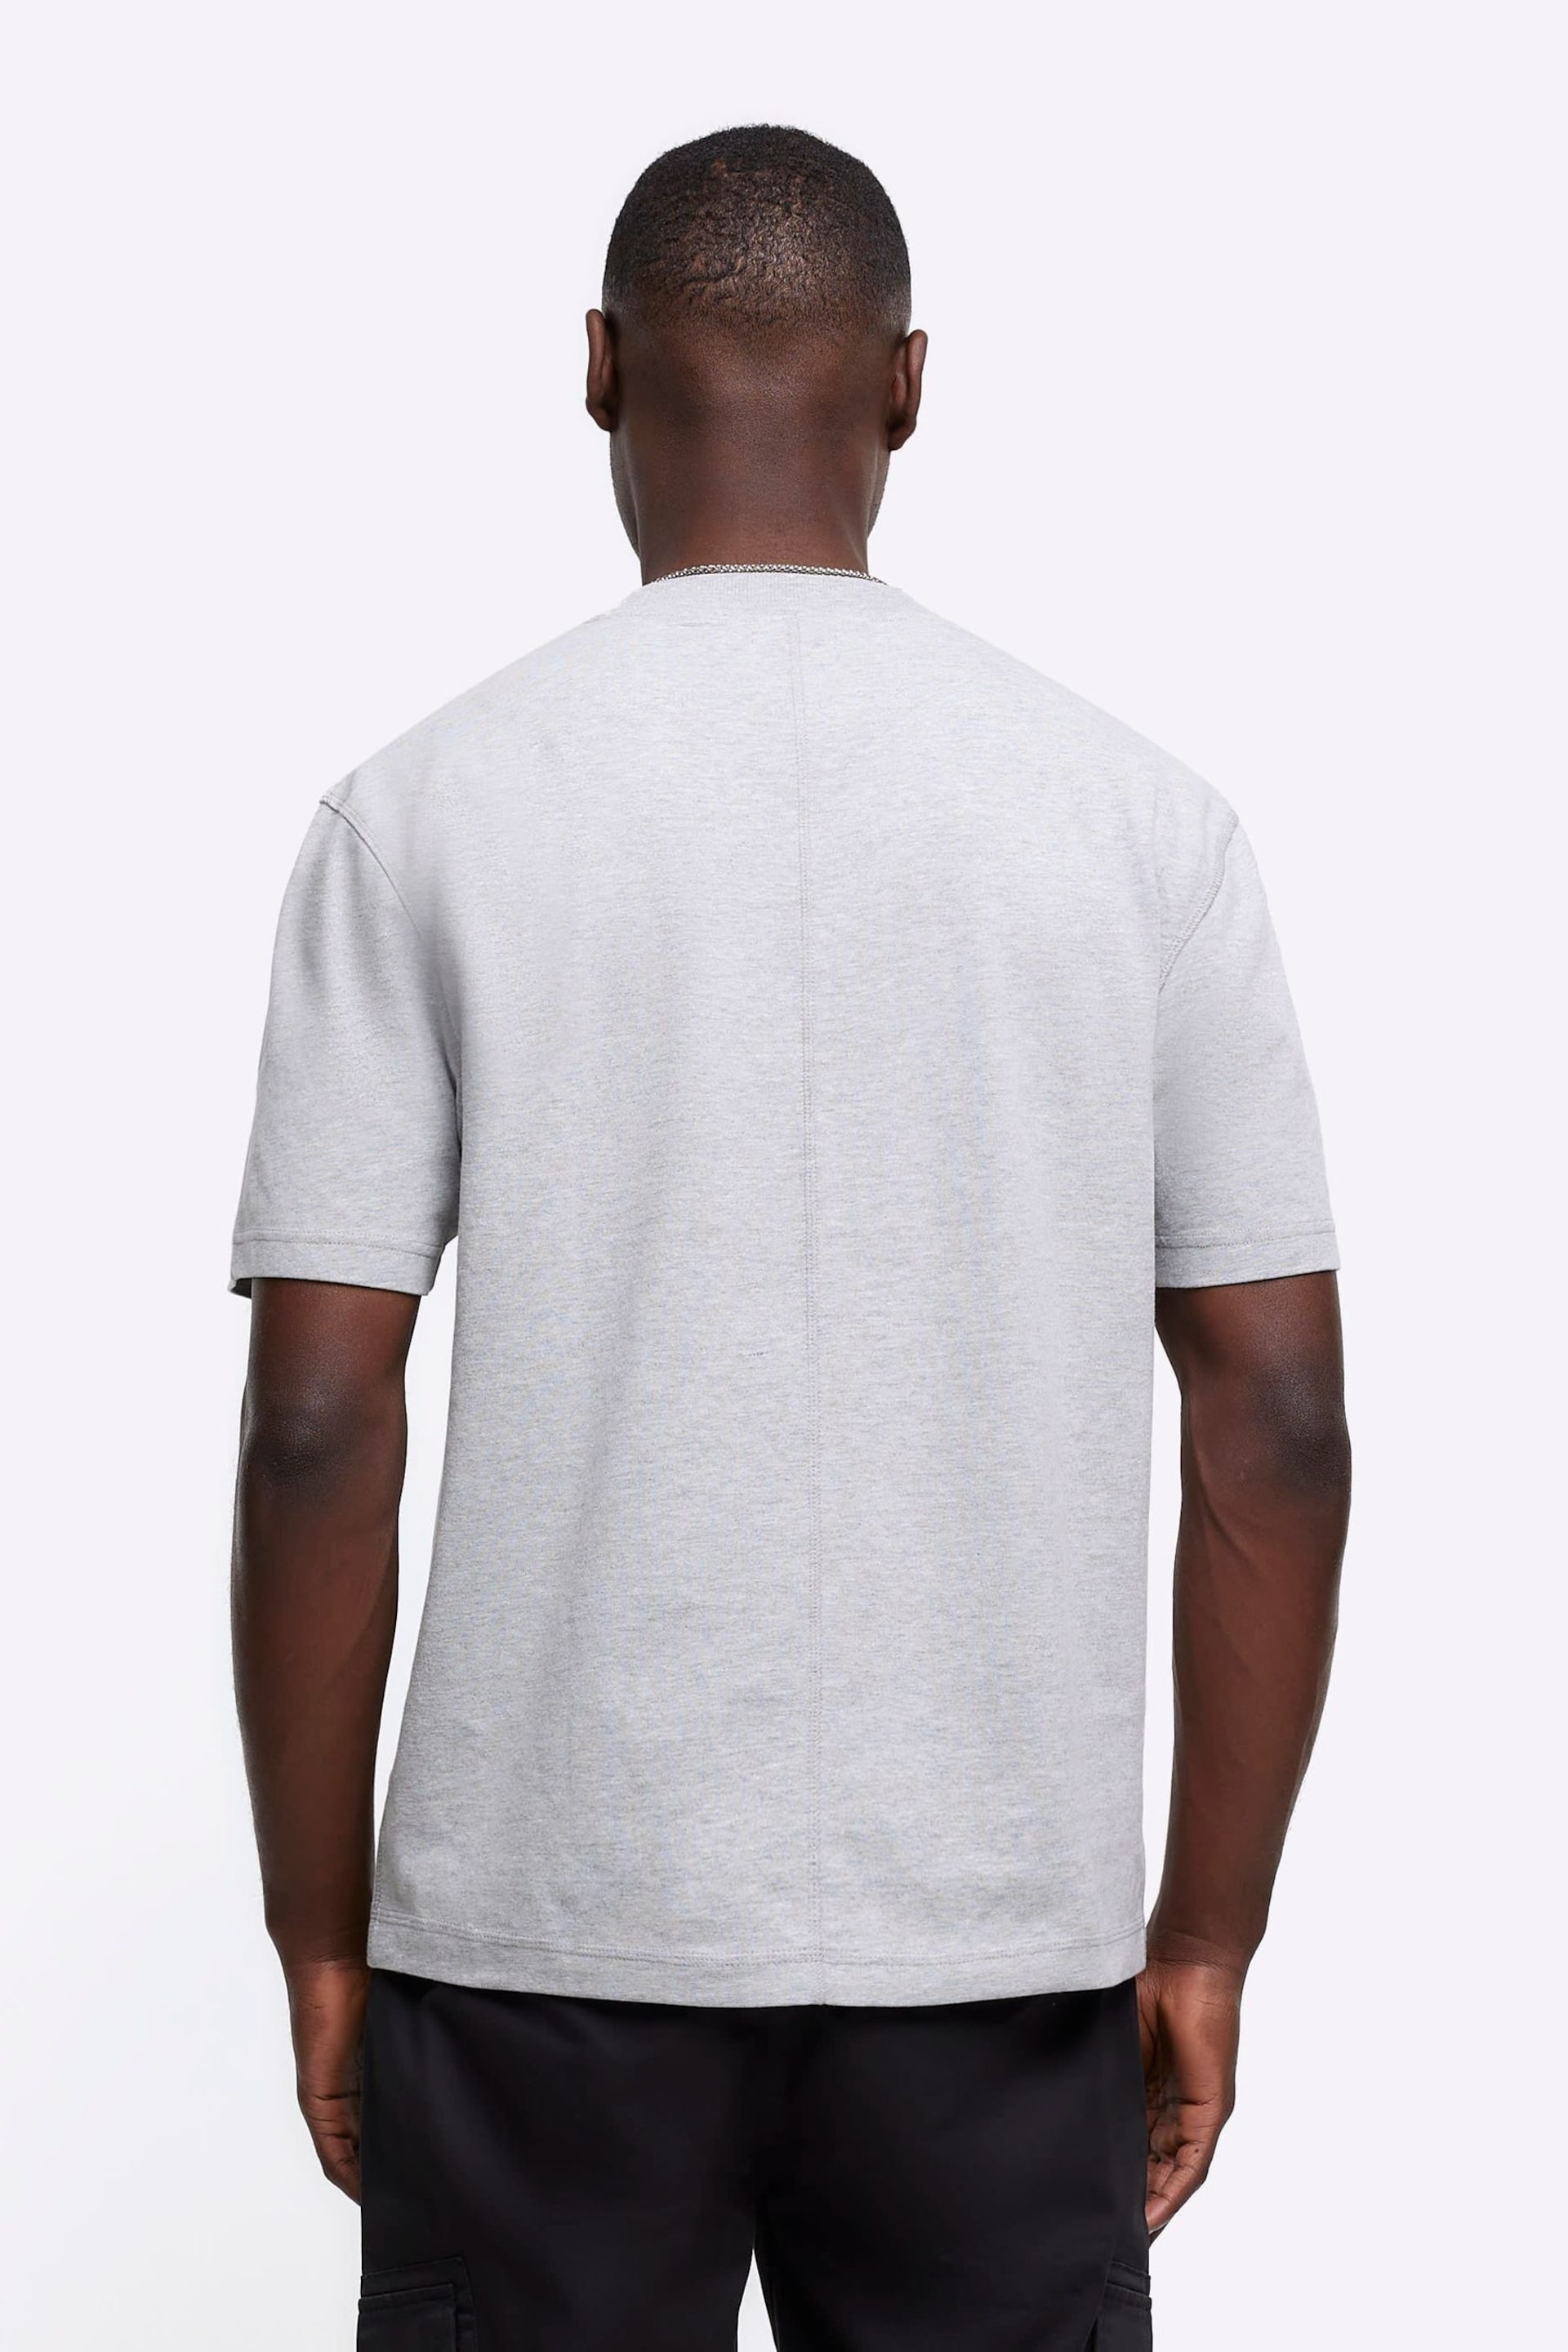 River Island Grey Studio Regular T-Shirt - Image 2 of 4